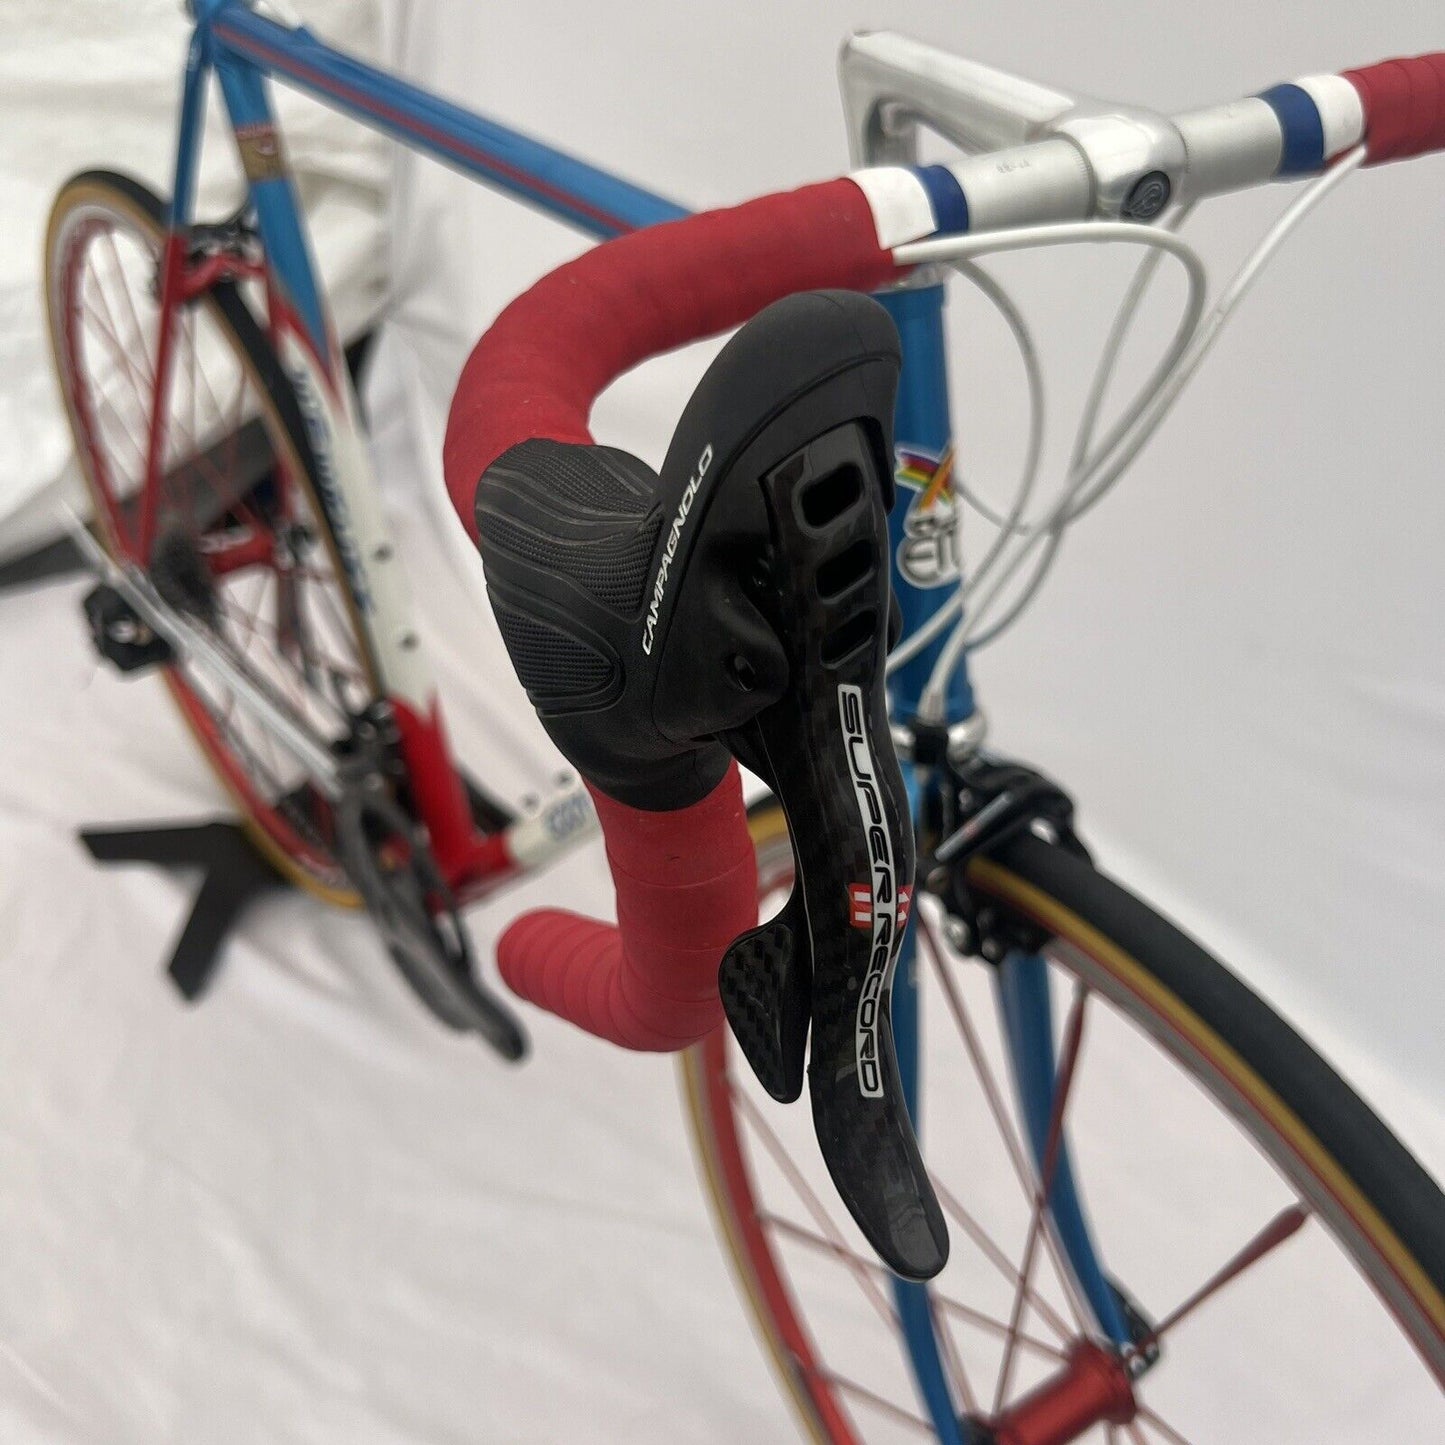 Eddy Merckx Mxl Team Motorola  Frame, Headset, Fork and Seatpost